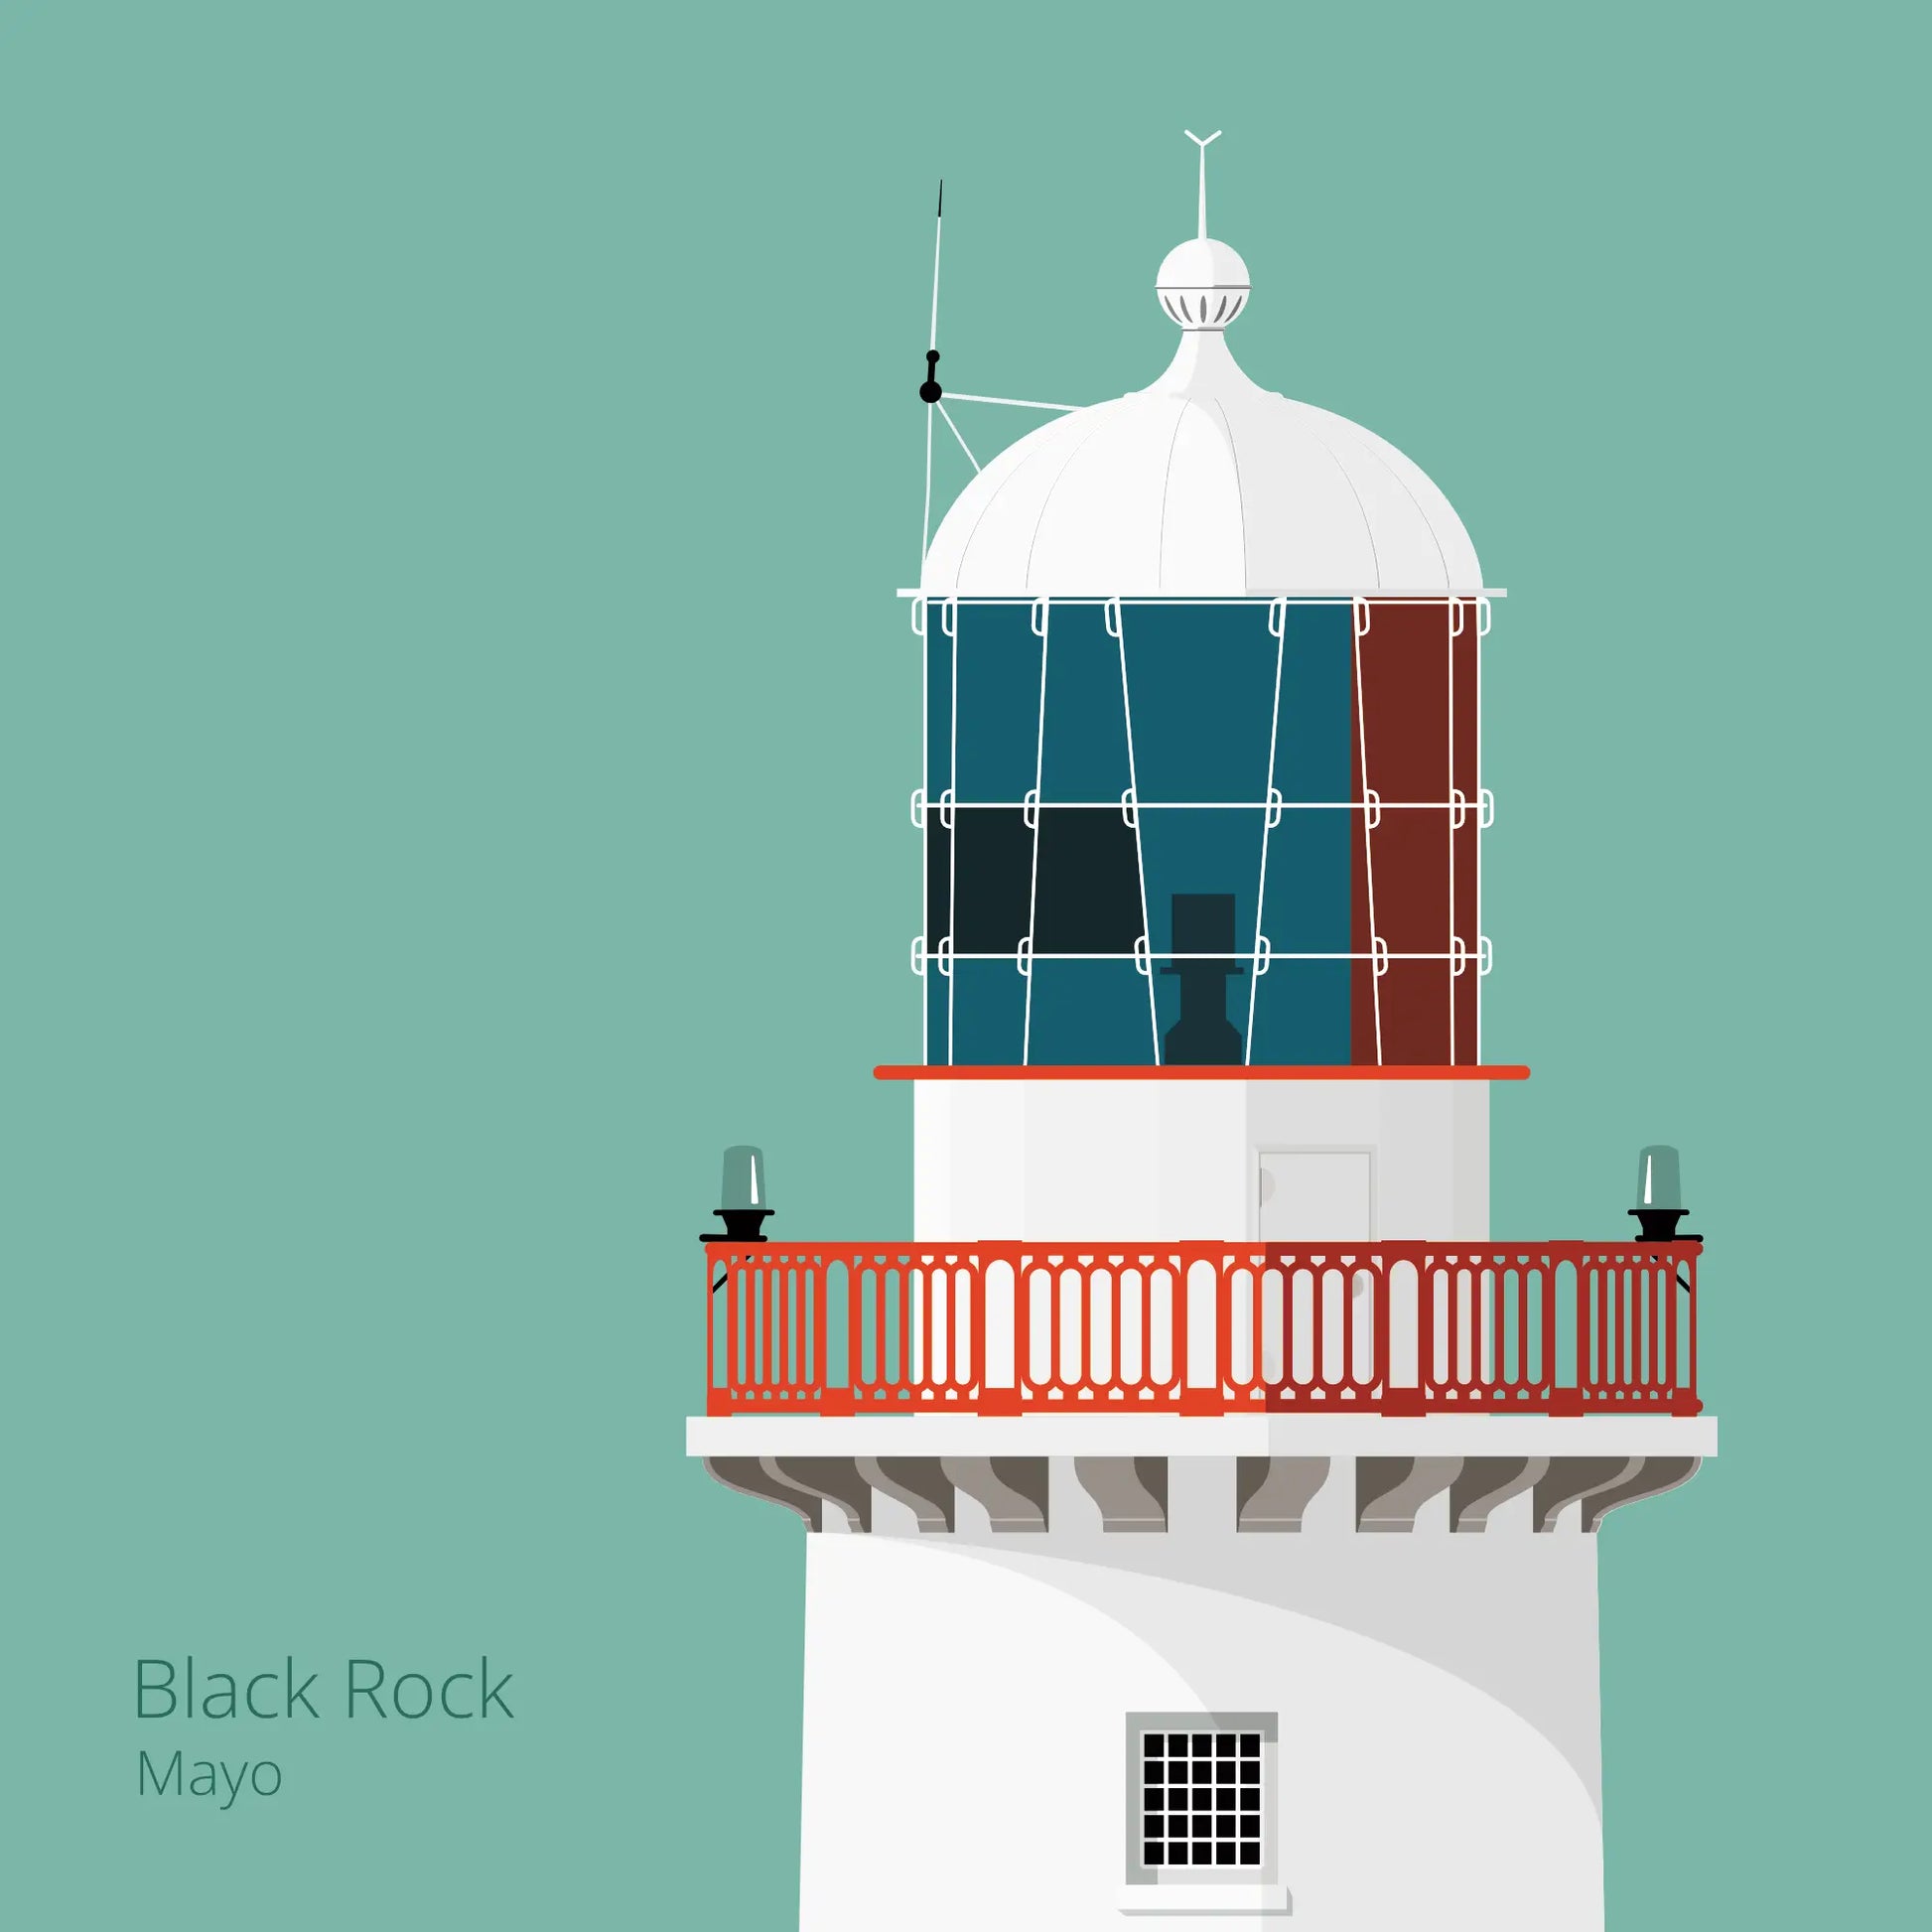 Illustration of Black Rock lighthouse on an ocean green background